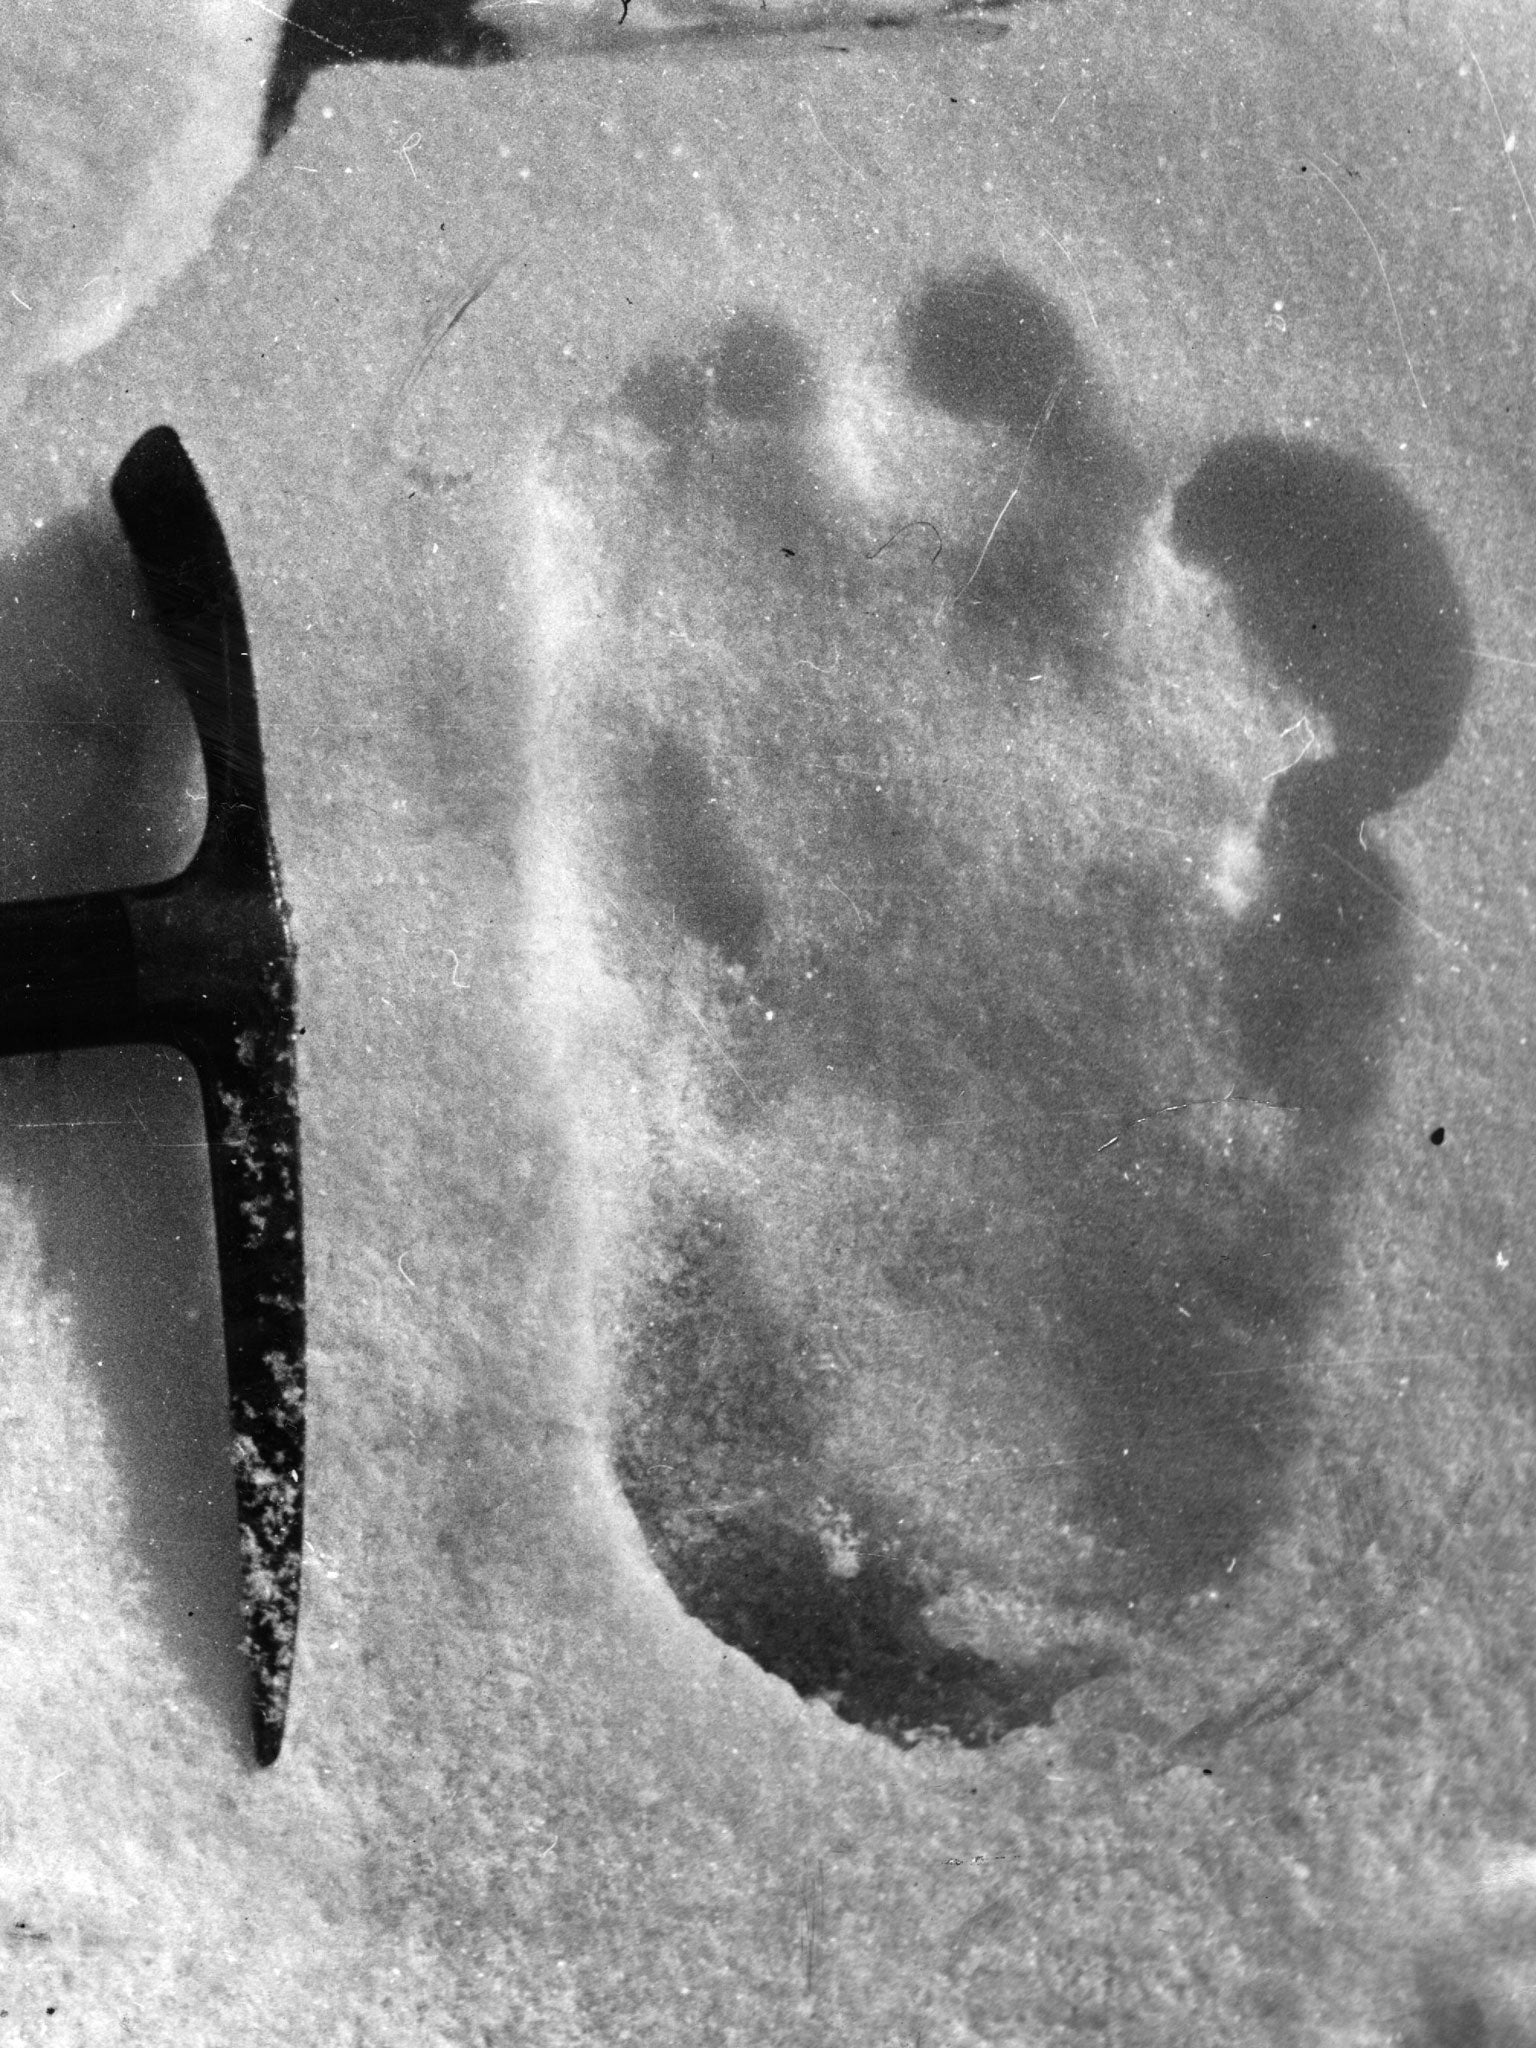 A Yeti's 'footprint'